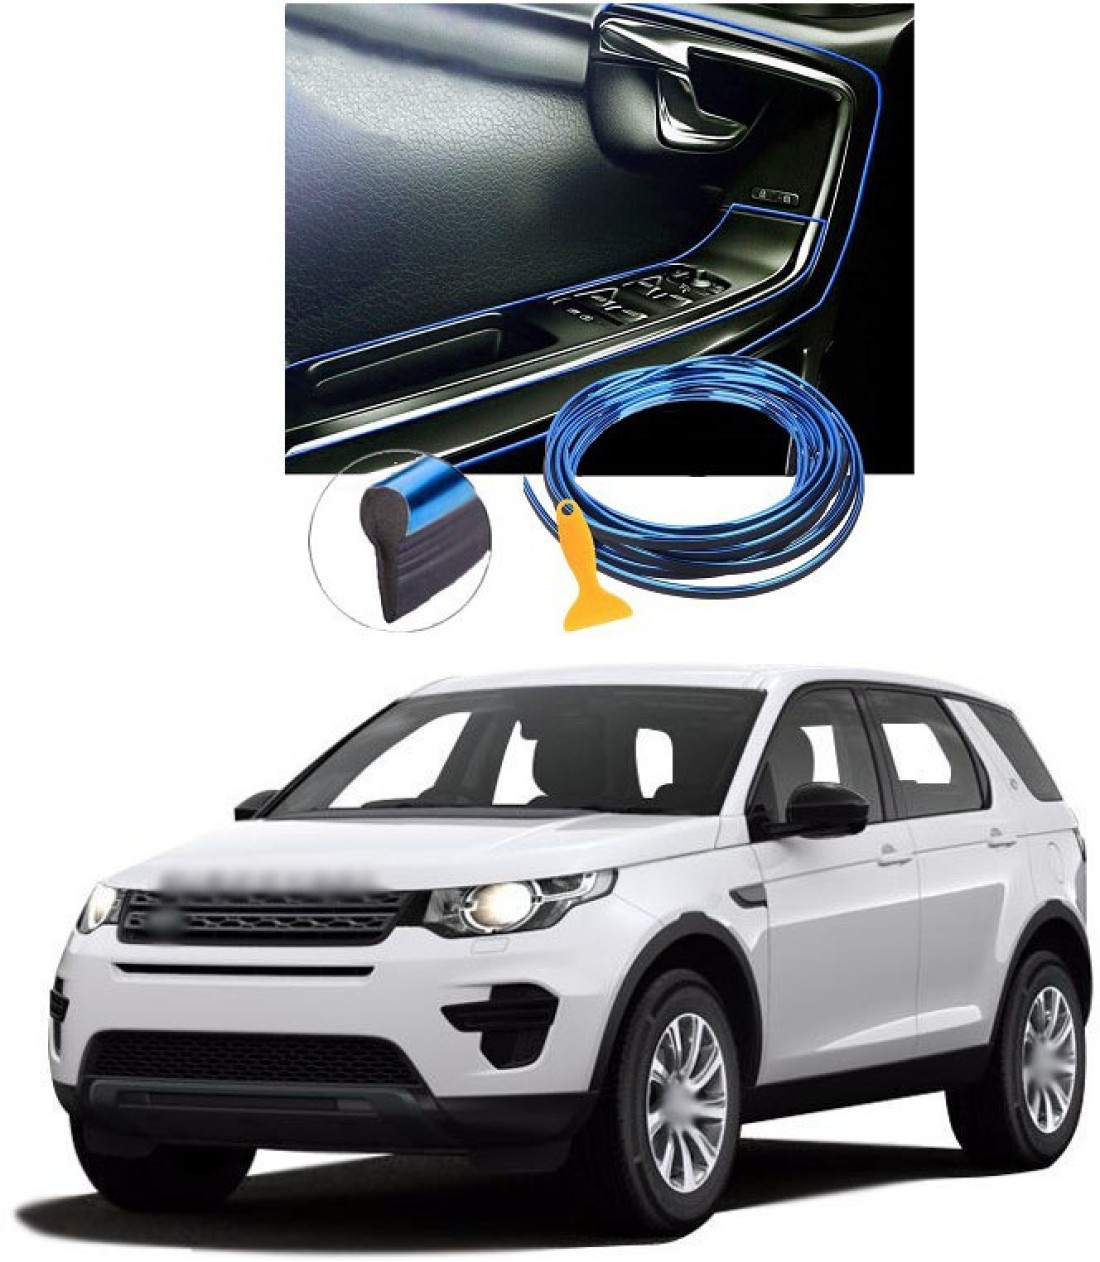 https://rukminim2.flixcart.com/image/1100/1300/kwqq1zk0/car-door-bumper-guard/9/d/n/1-car-interior-trim-strips-16-4ft-5m-universal-car-gap-fillers-original-imag9cshzqdp5wyq.jpeg?q=90